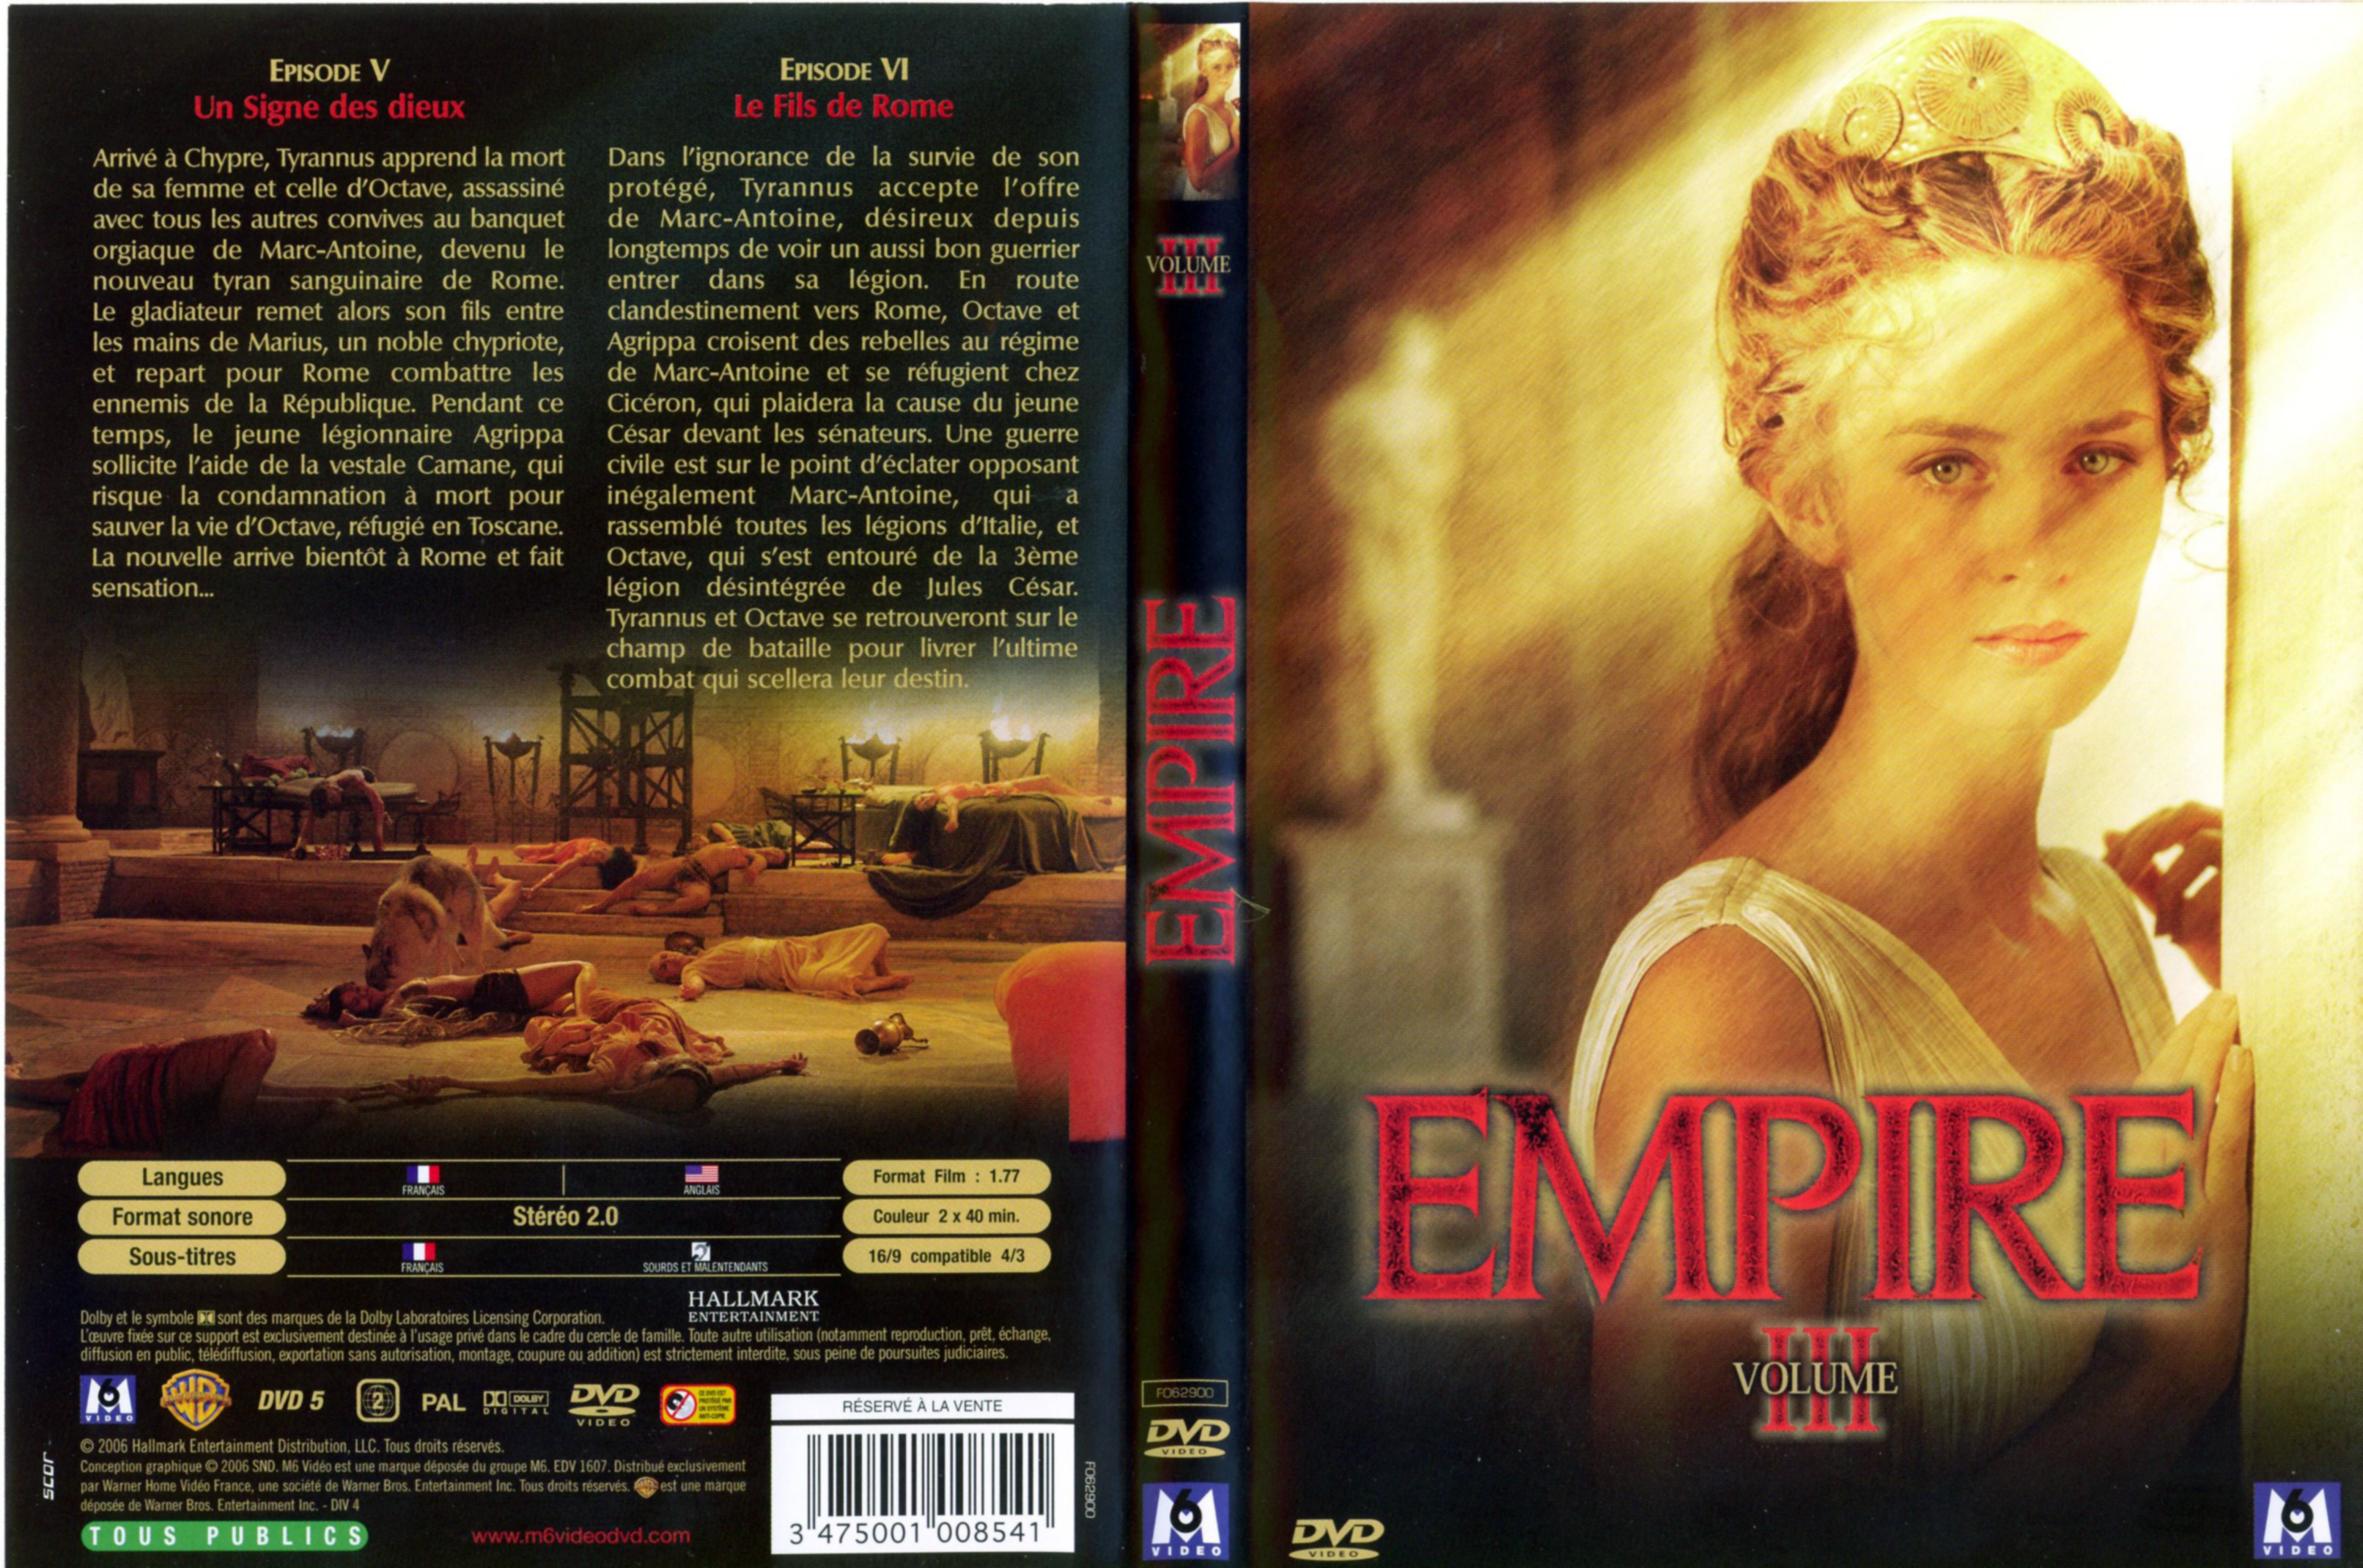 Jaquette DVD Empire vol 3